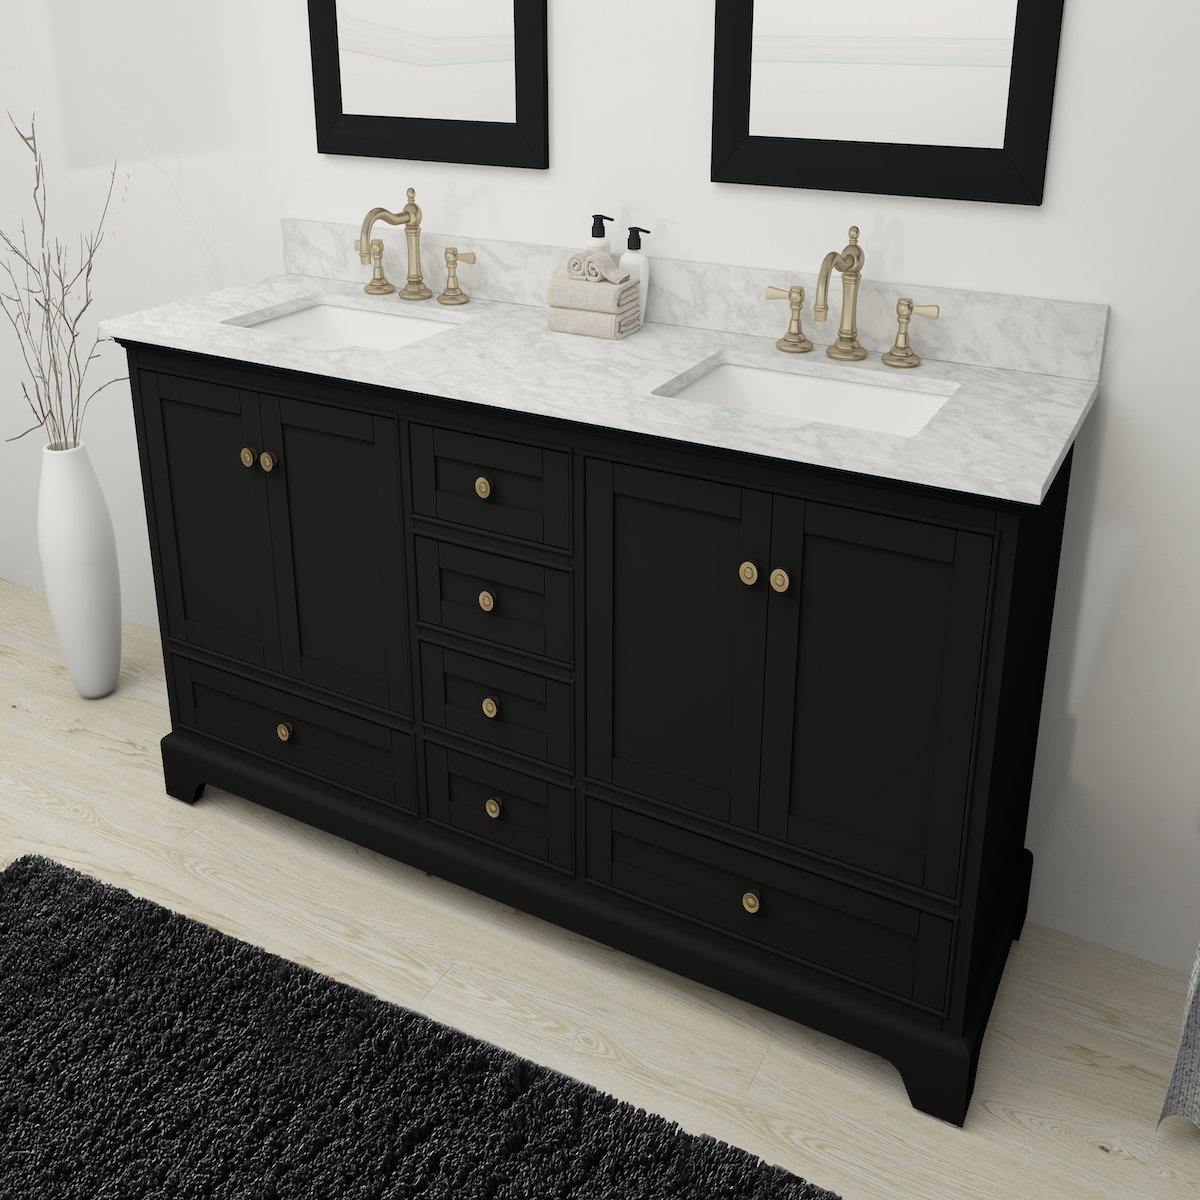 Ancerre Designs Audrey 72 Inch Onyx Black Double Vanity in Bathroom